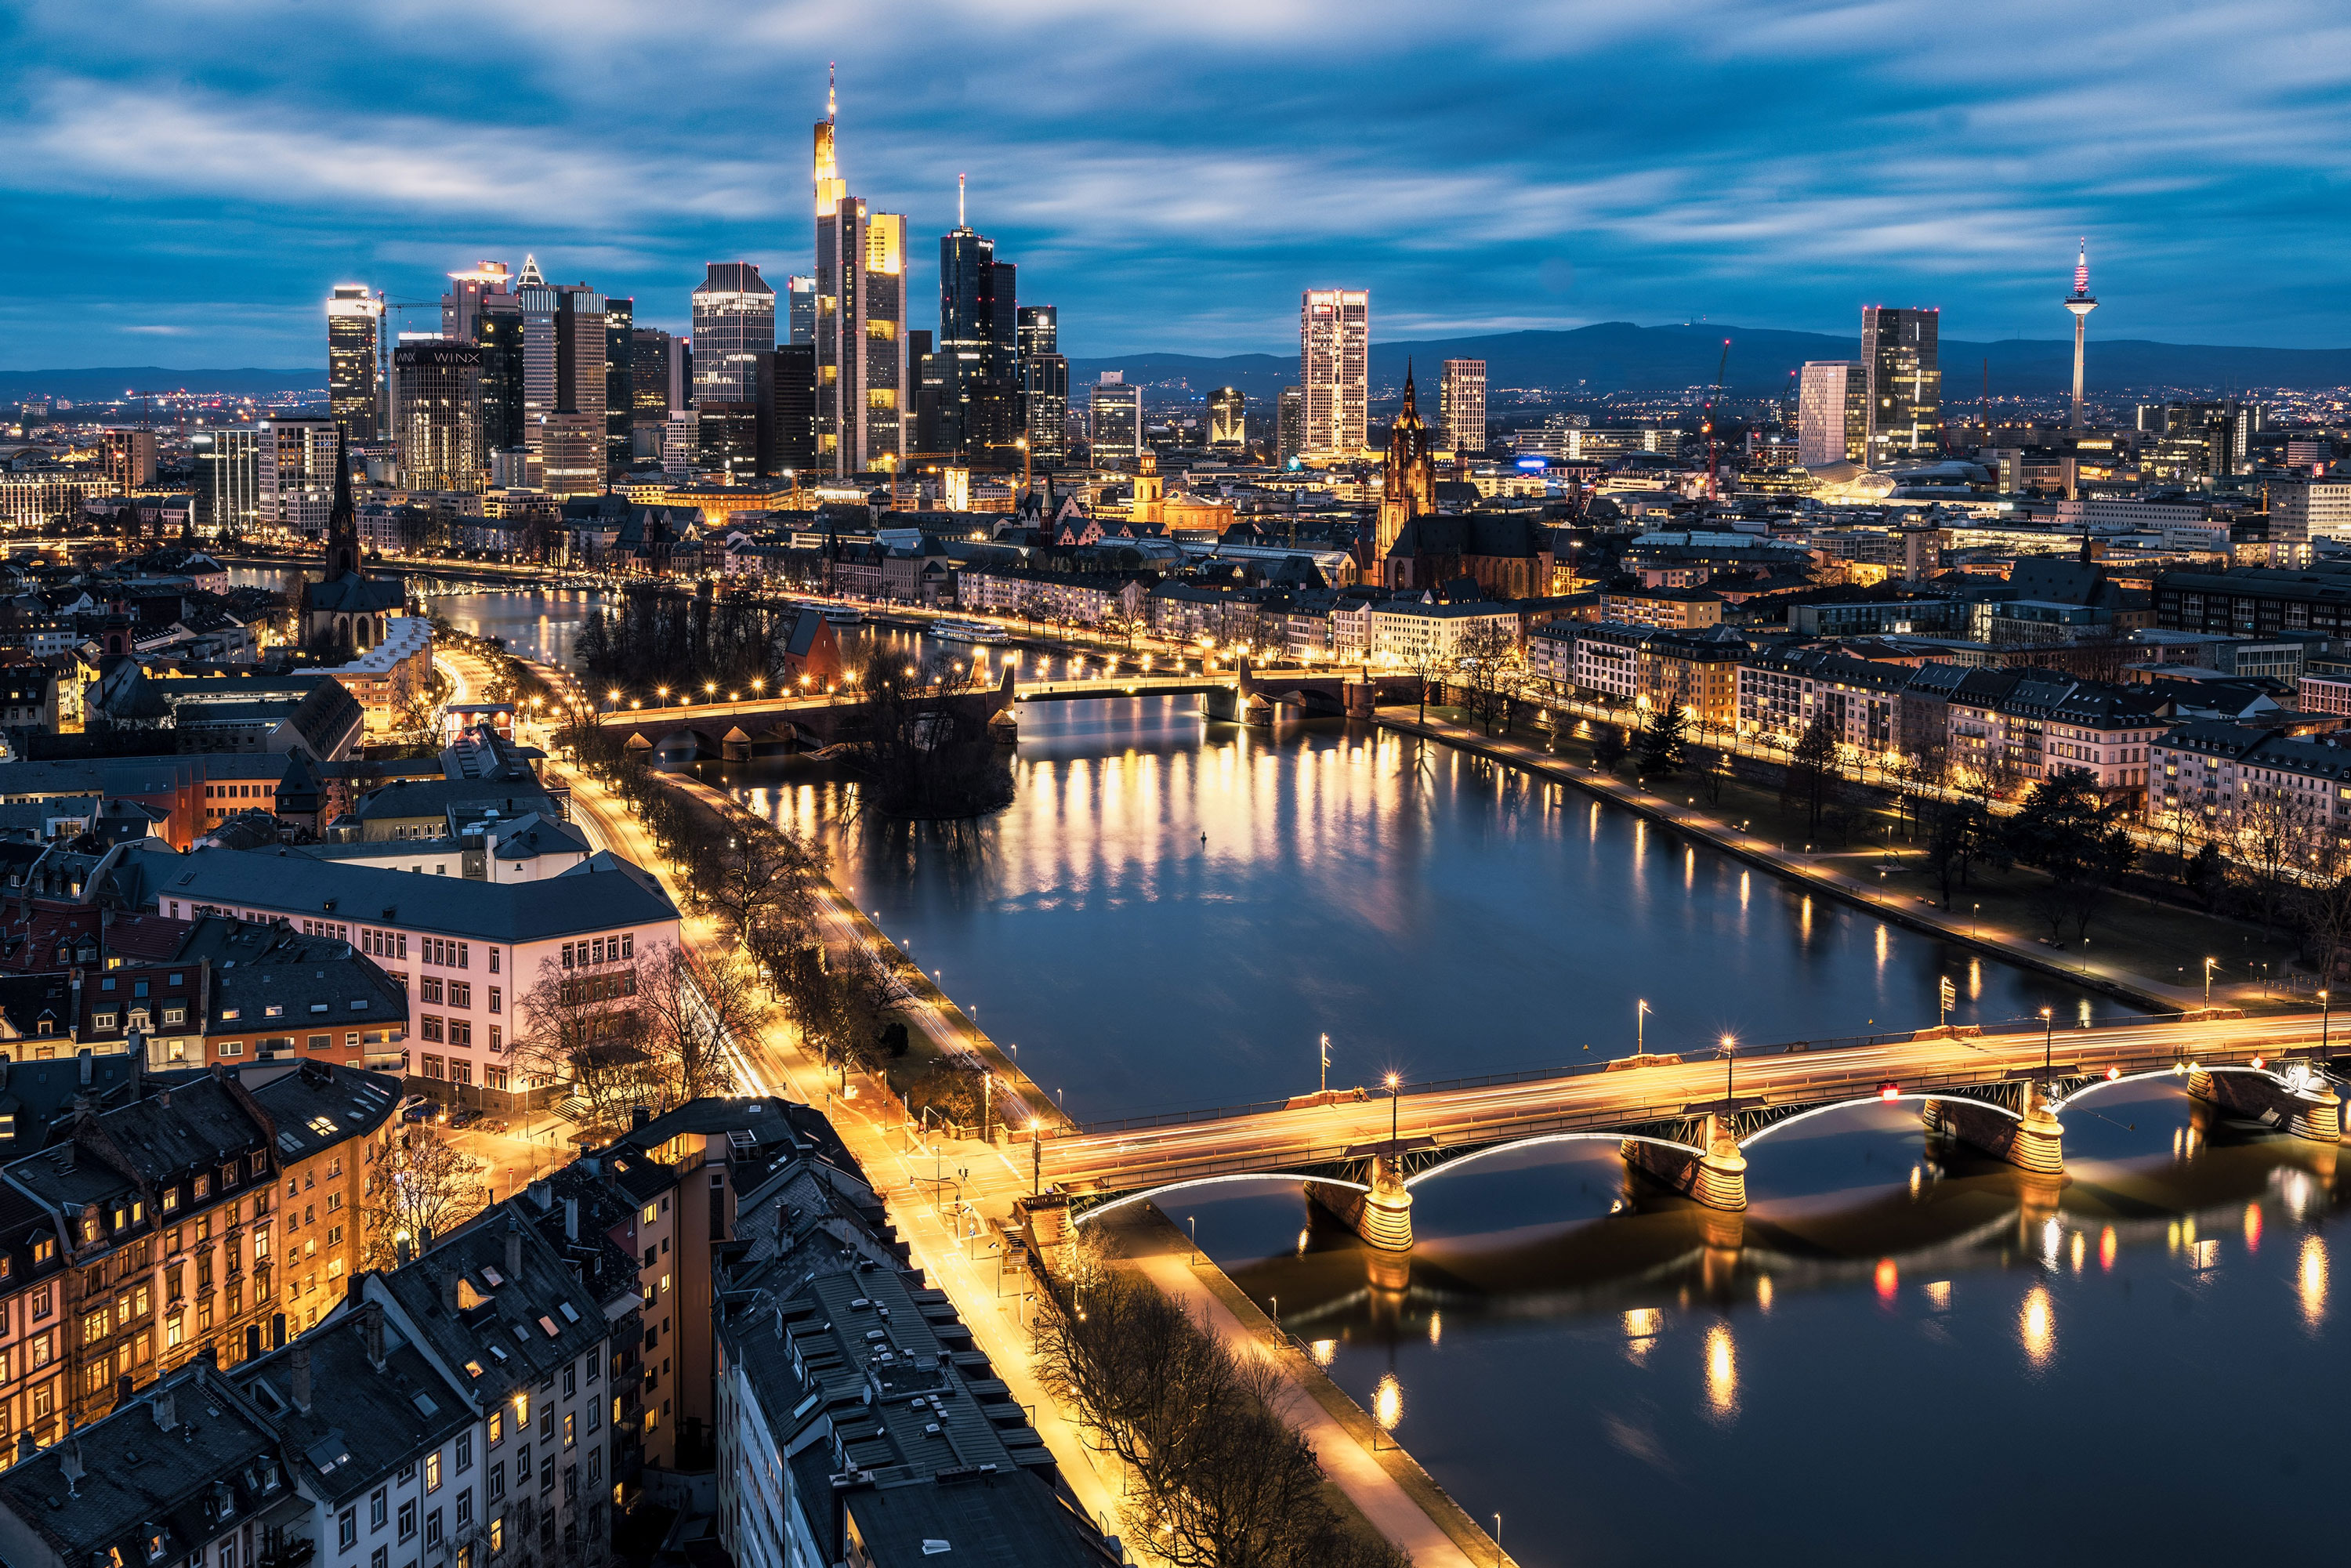 image of Frankfurt